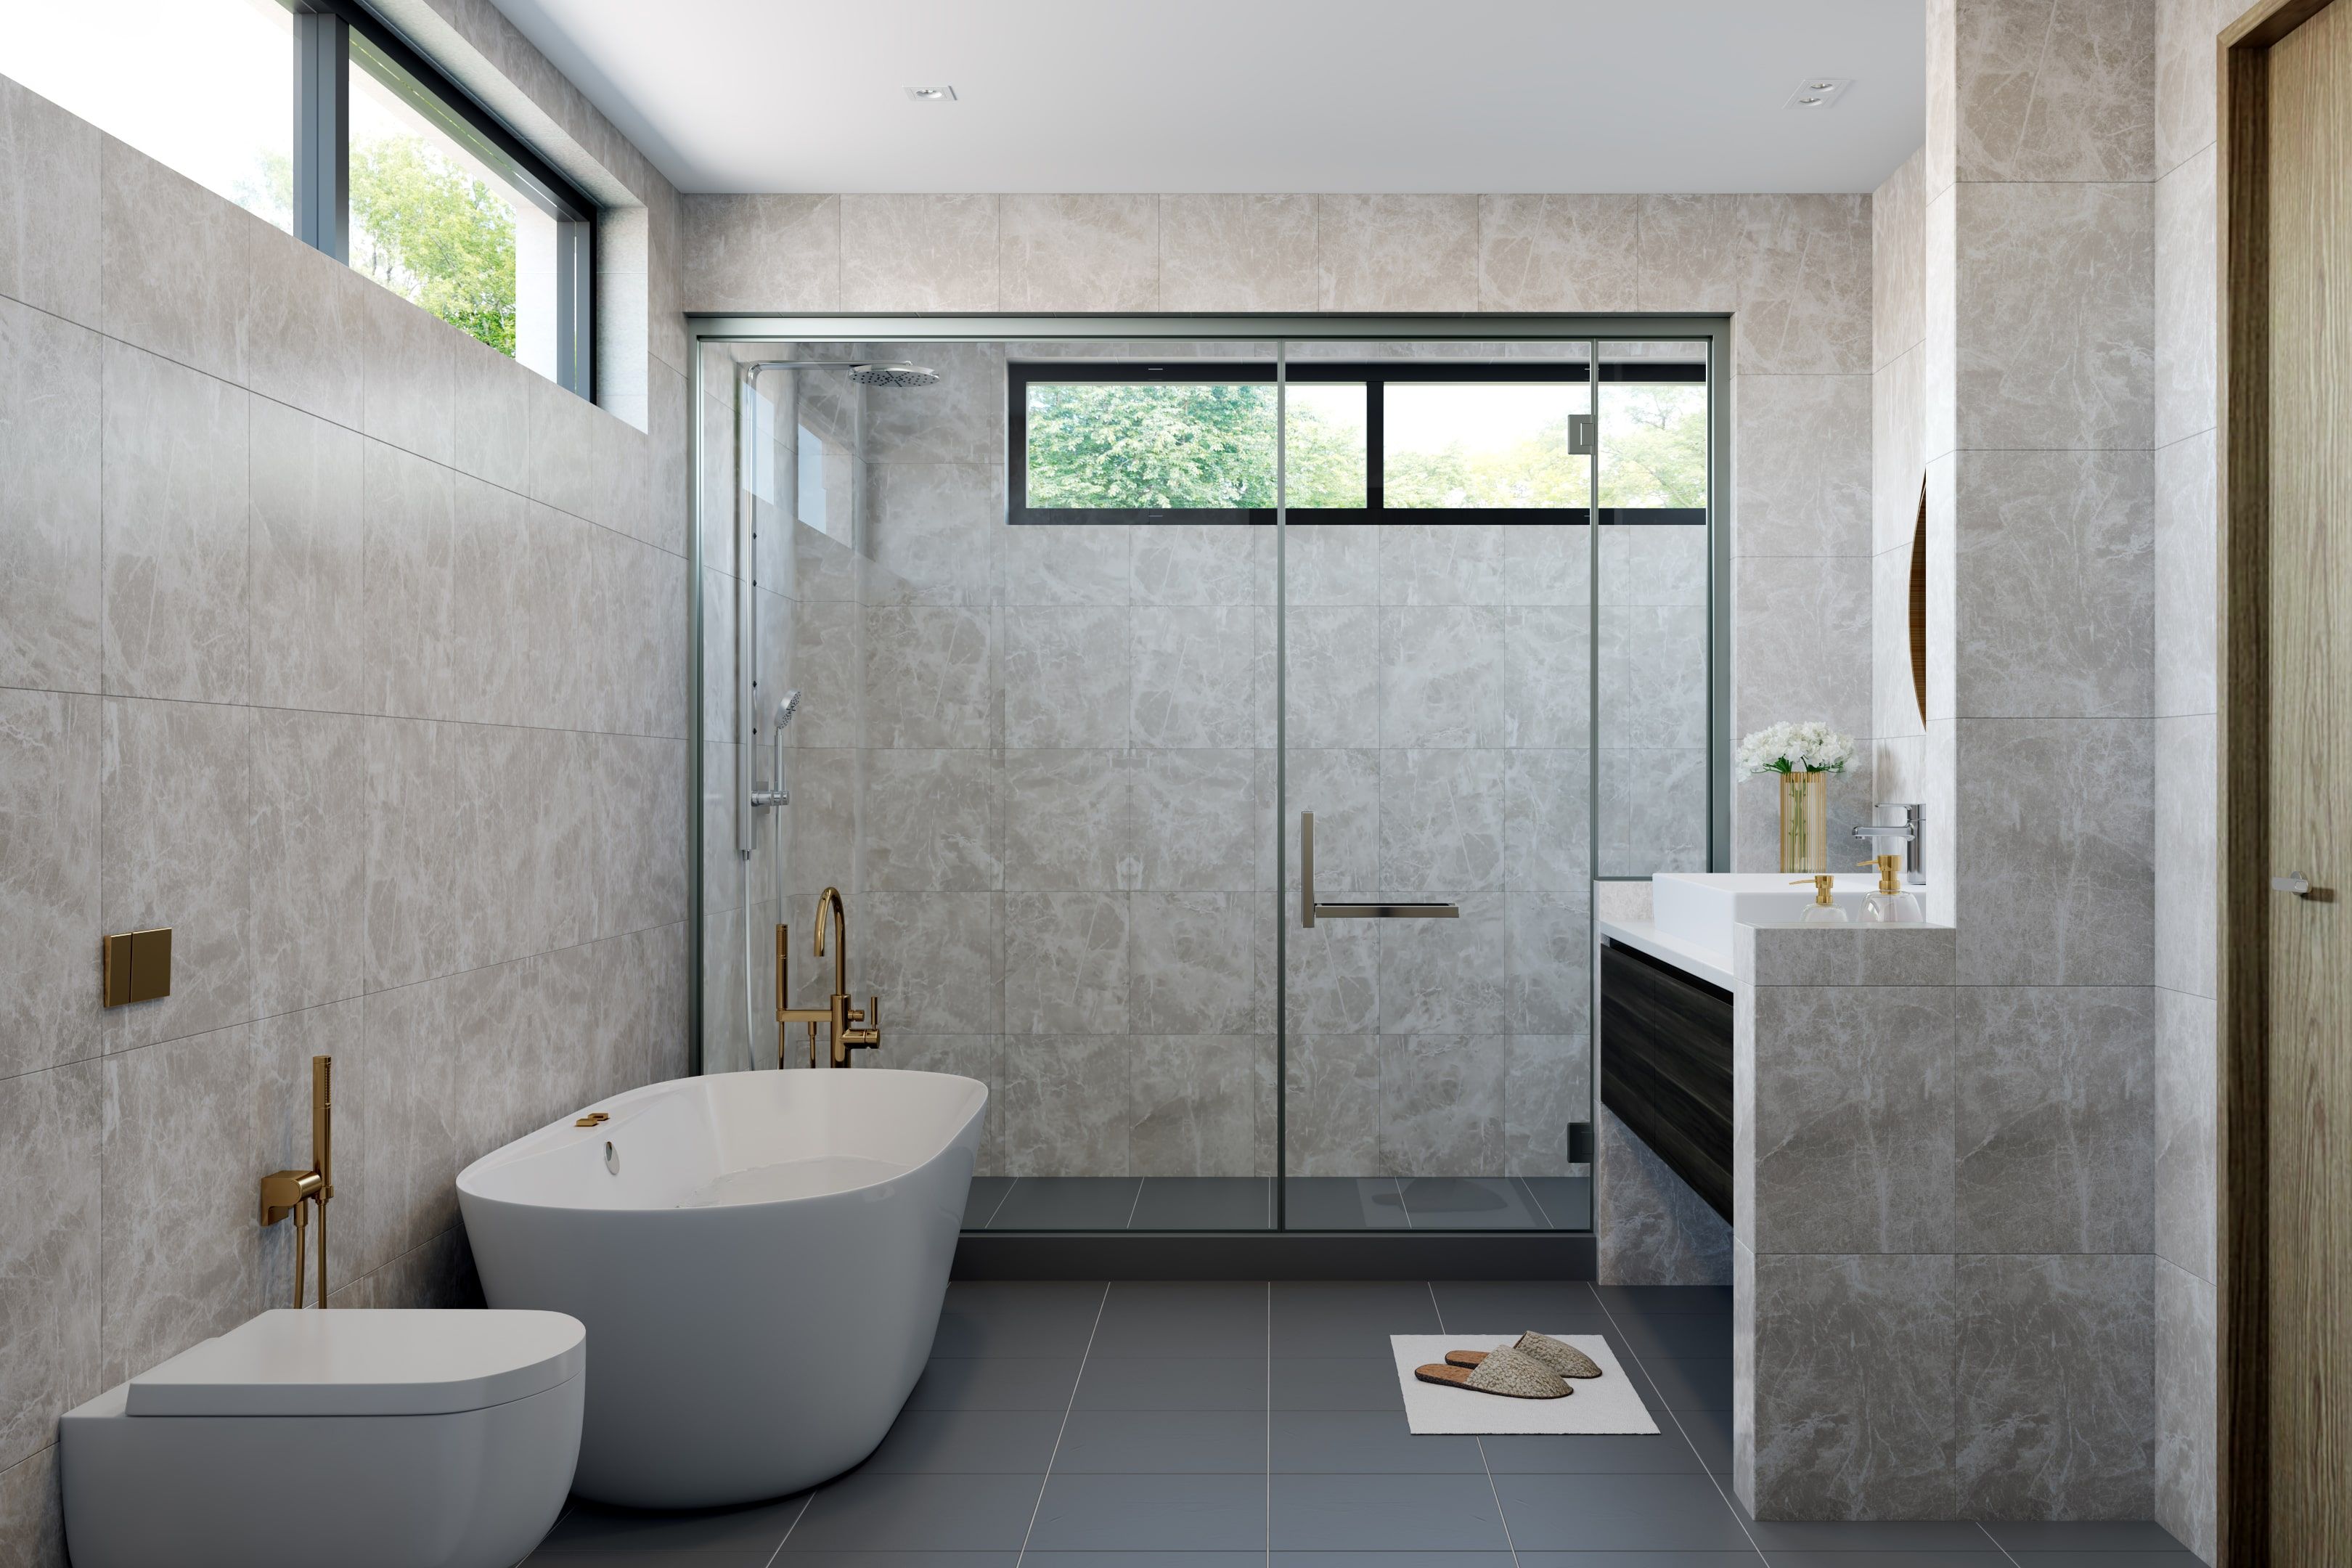 Ceramic Satin Finish Bathroom Tile Design In Brown And White